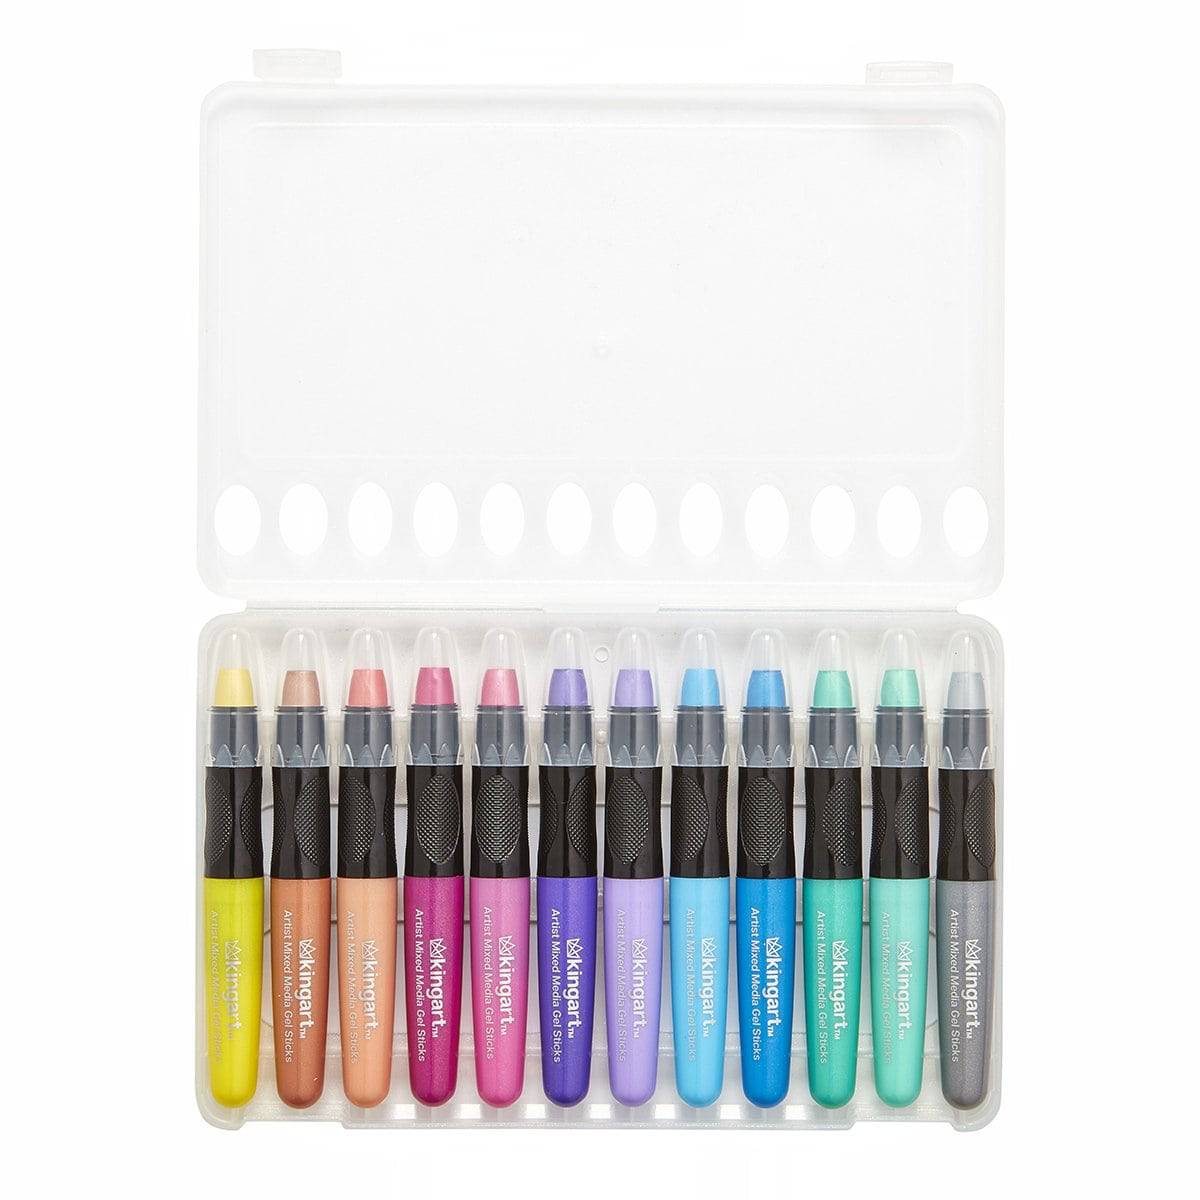 KINGART® Gel Stick Artist Mixed Media Watercolor Crayons, Set of 12  Metallic Colors